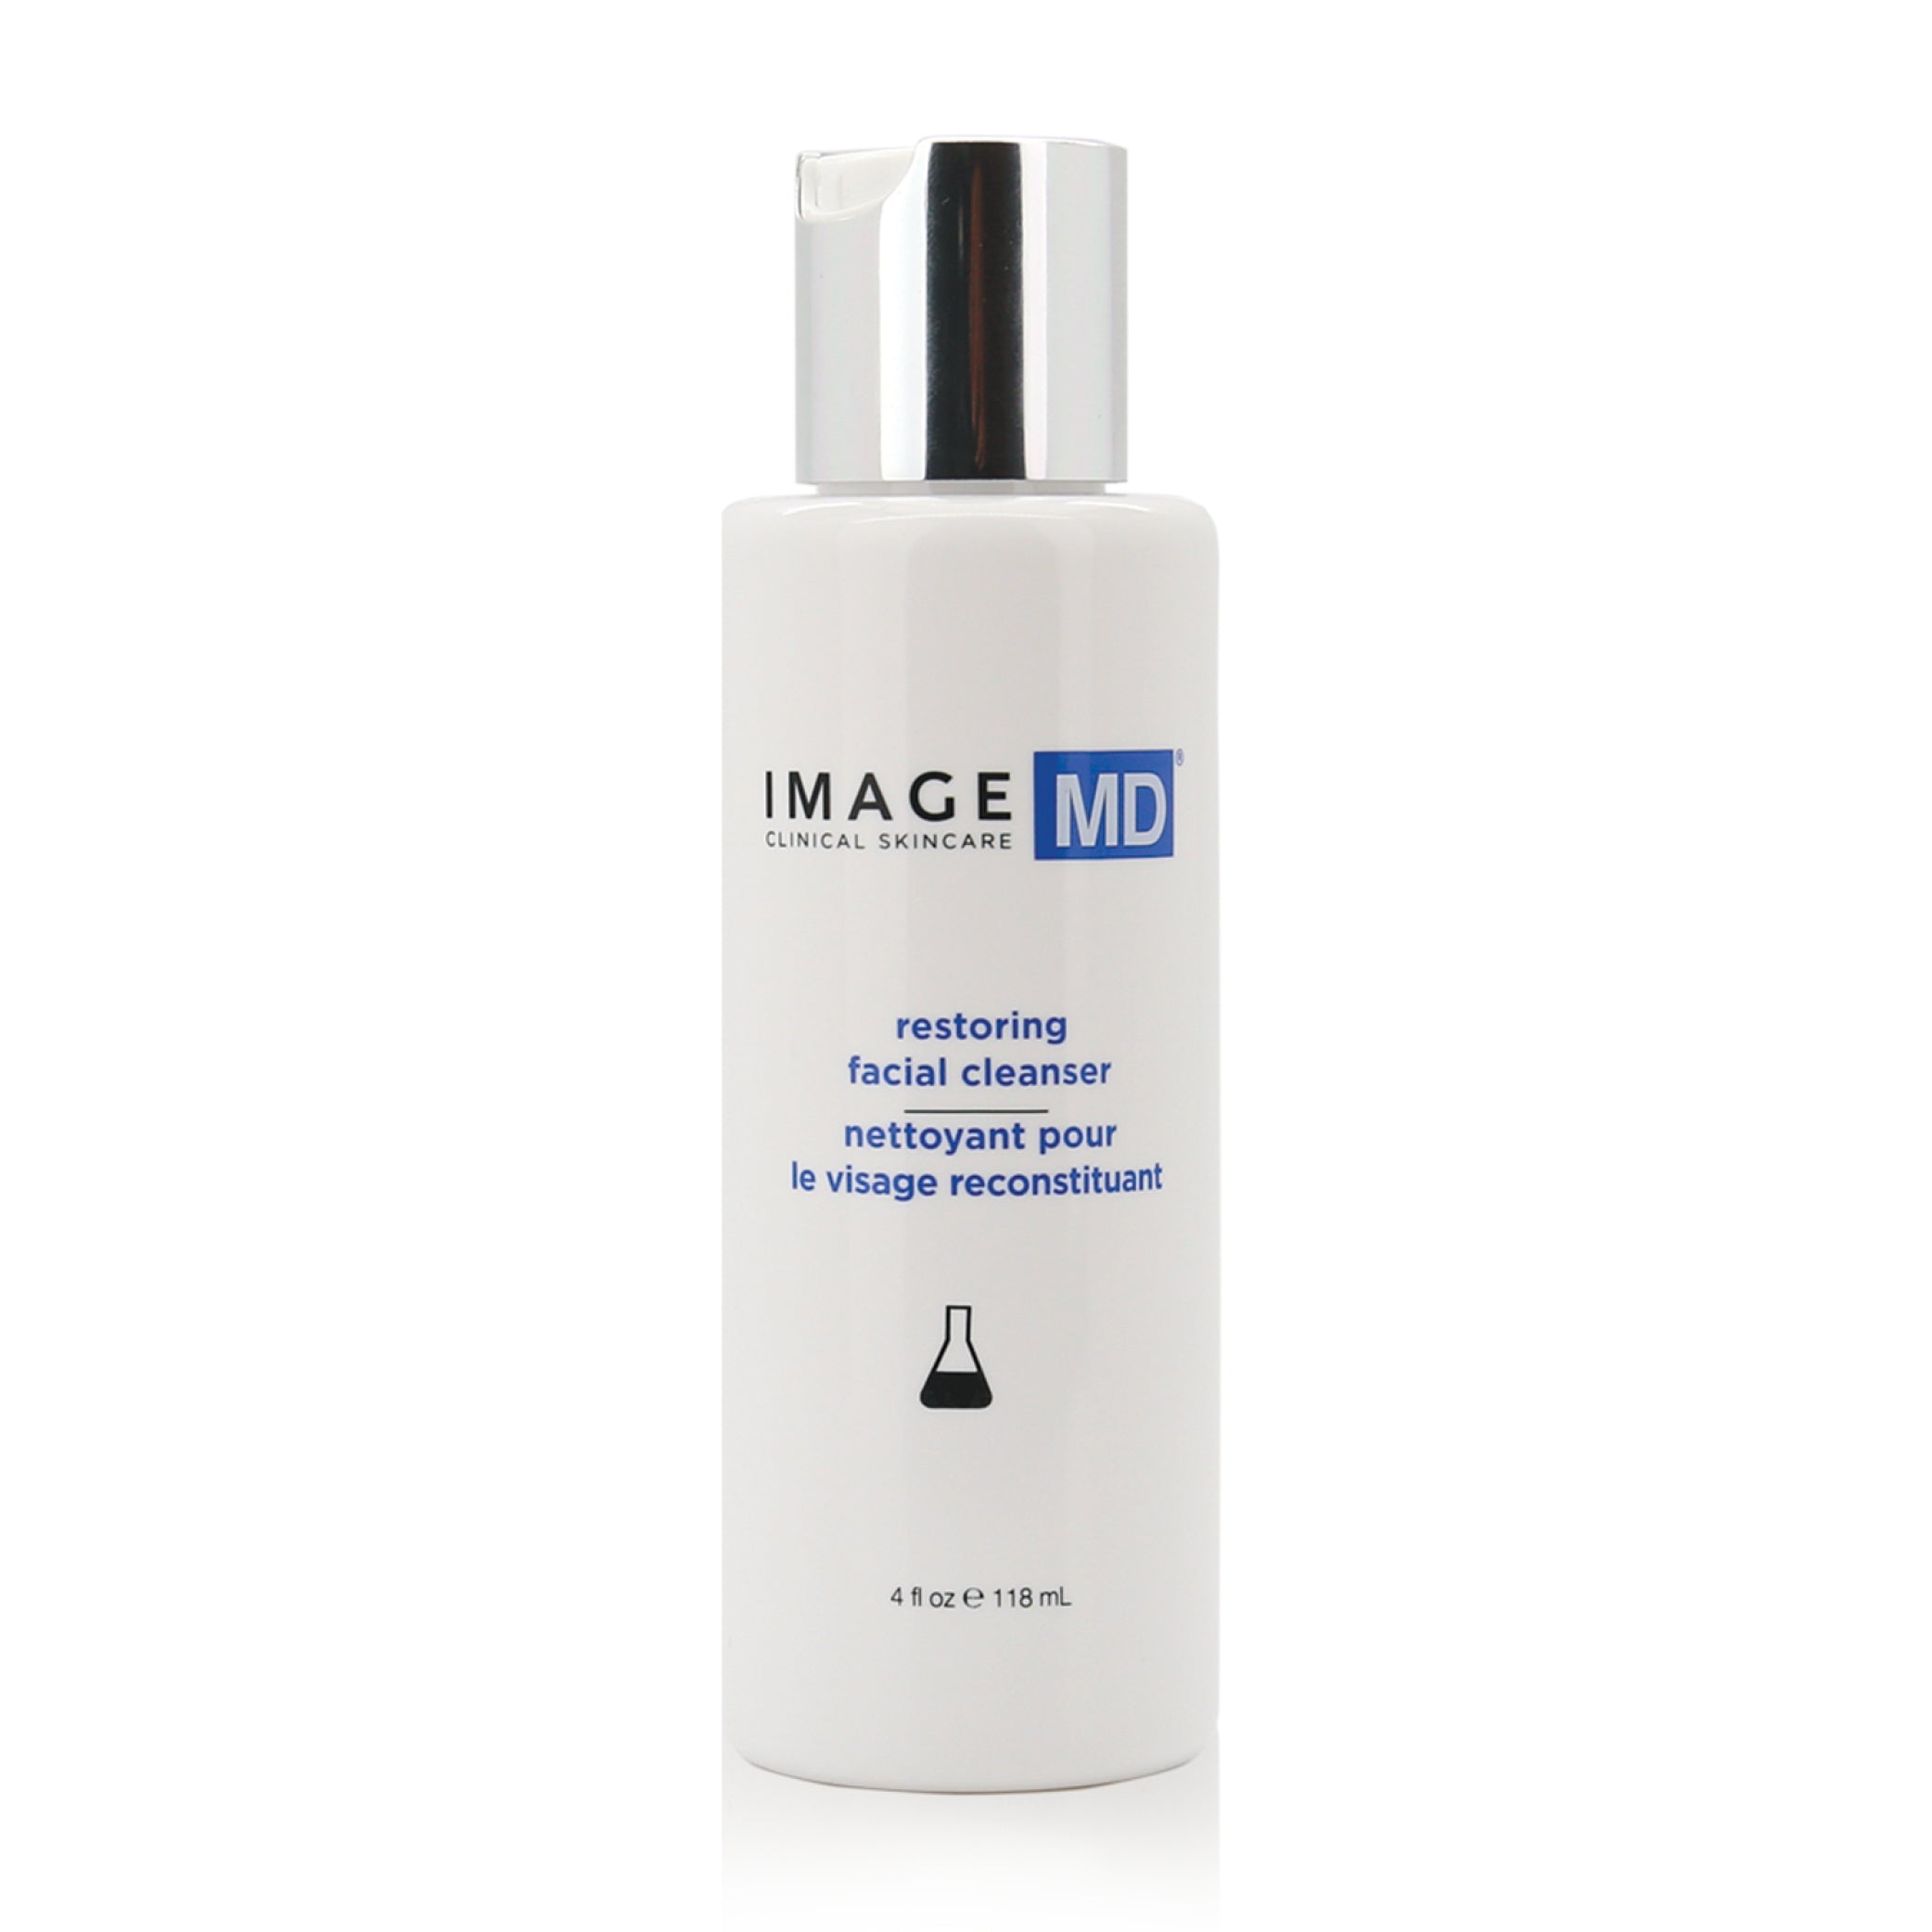 IMAGE MD® Restoring Facial Cleanser